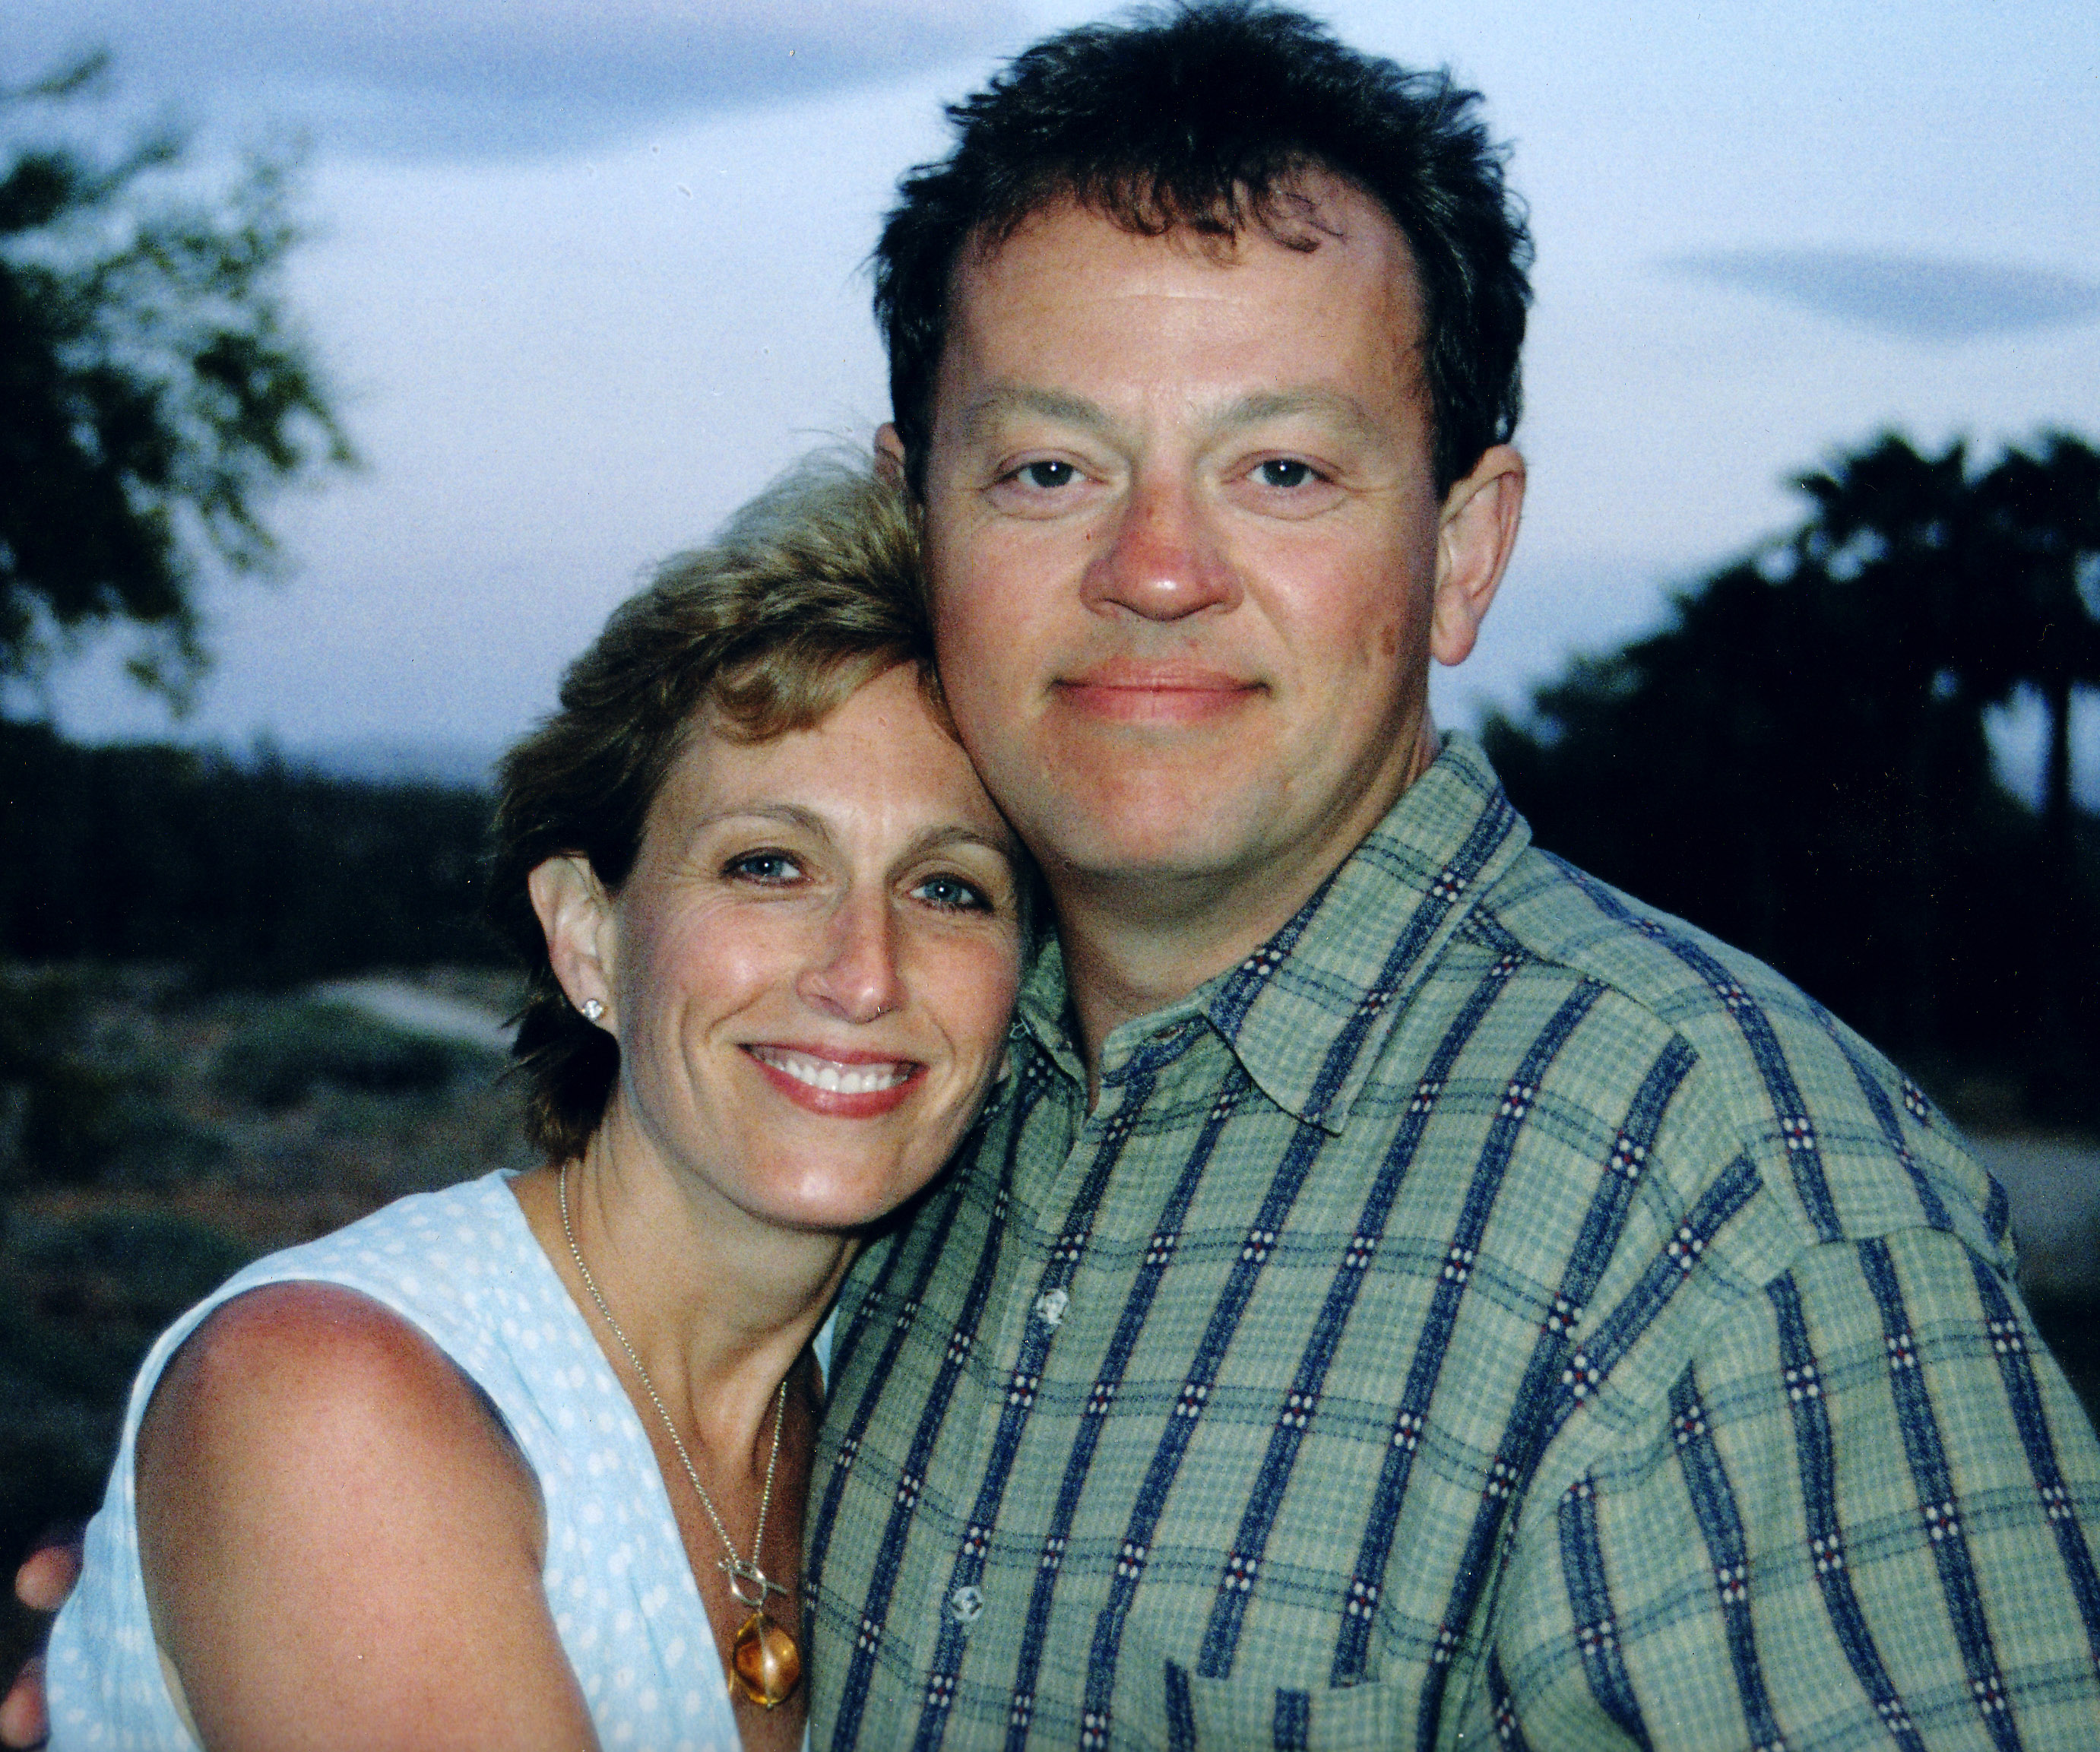 David and wife Kathryn